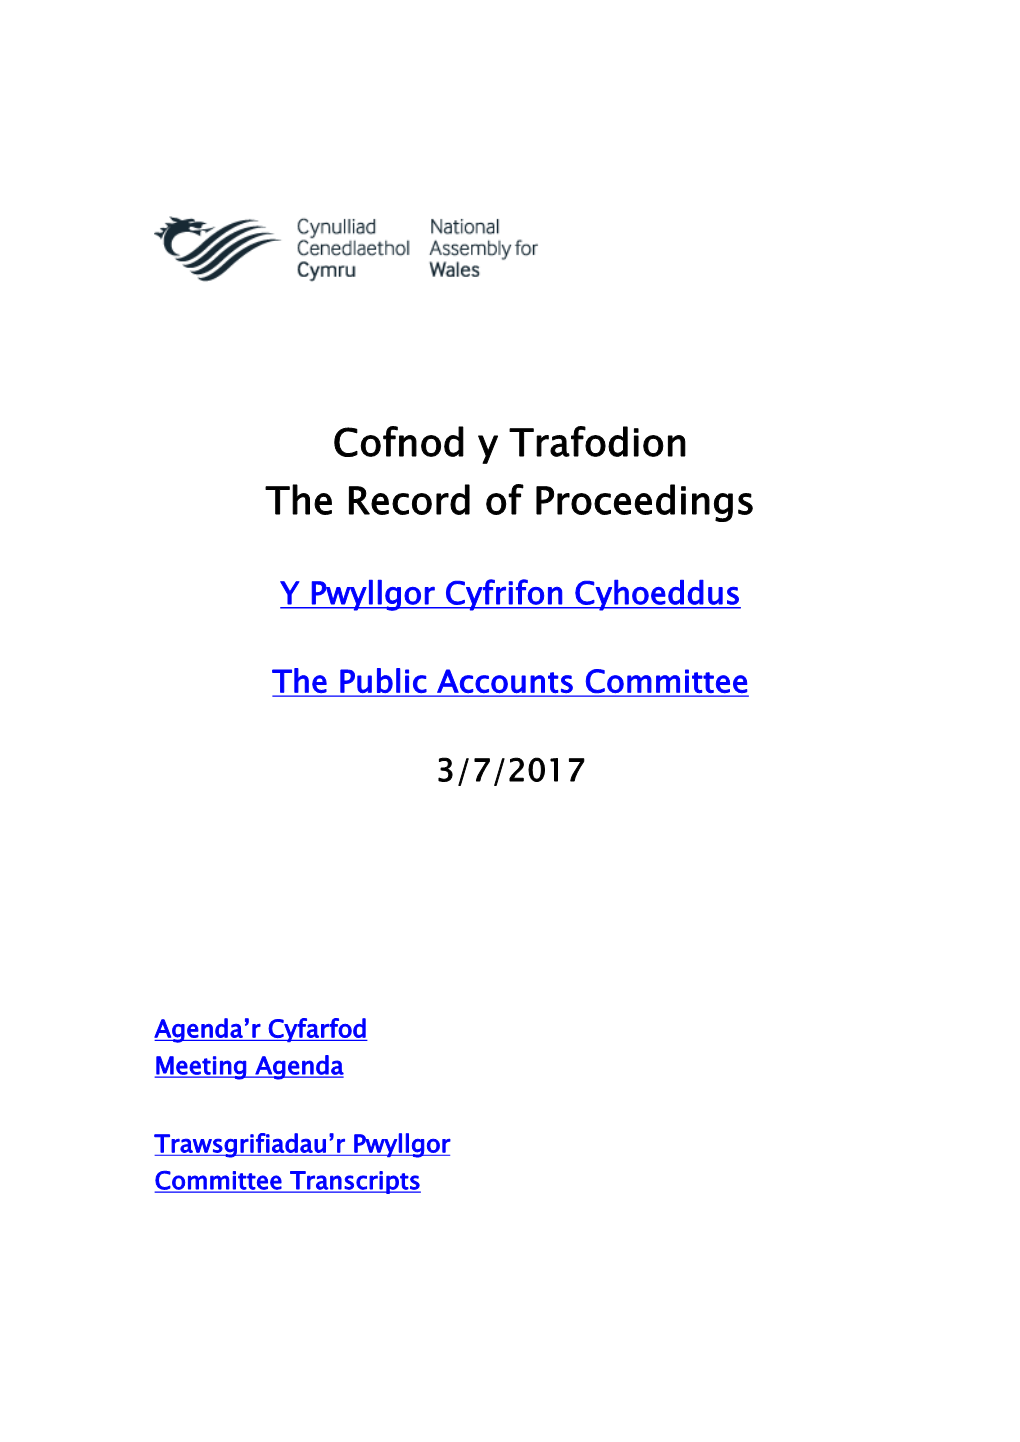 Cofnod Y Trafodion the Record of Proceedings